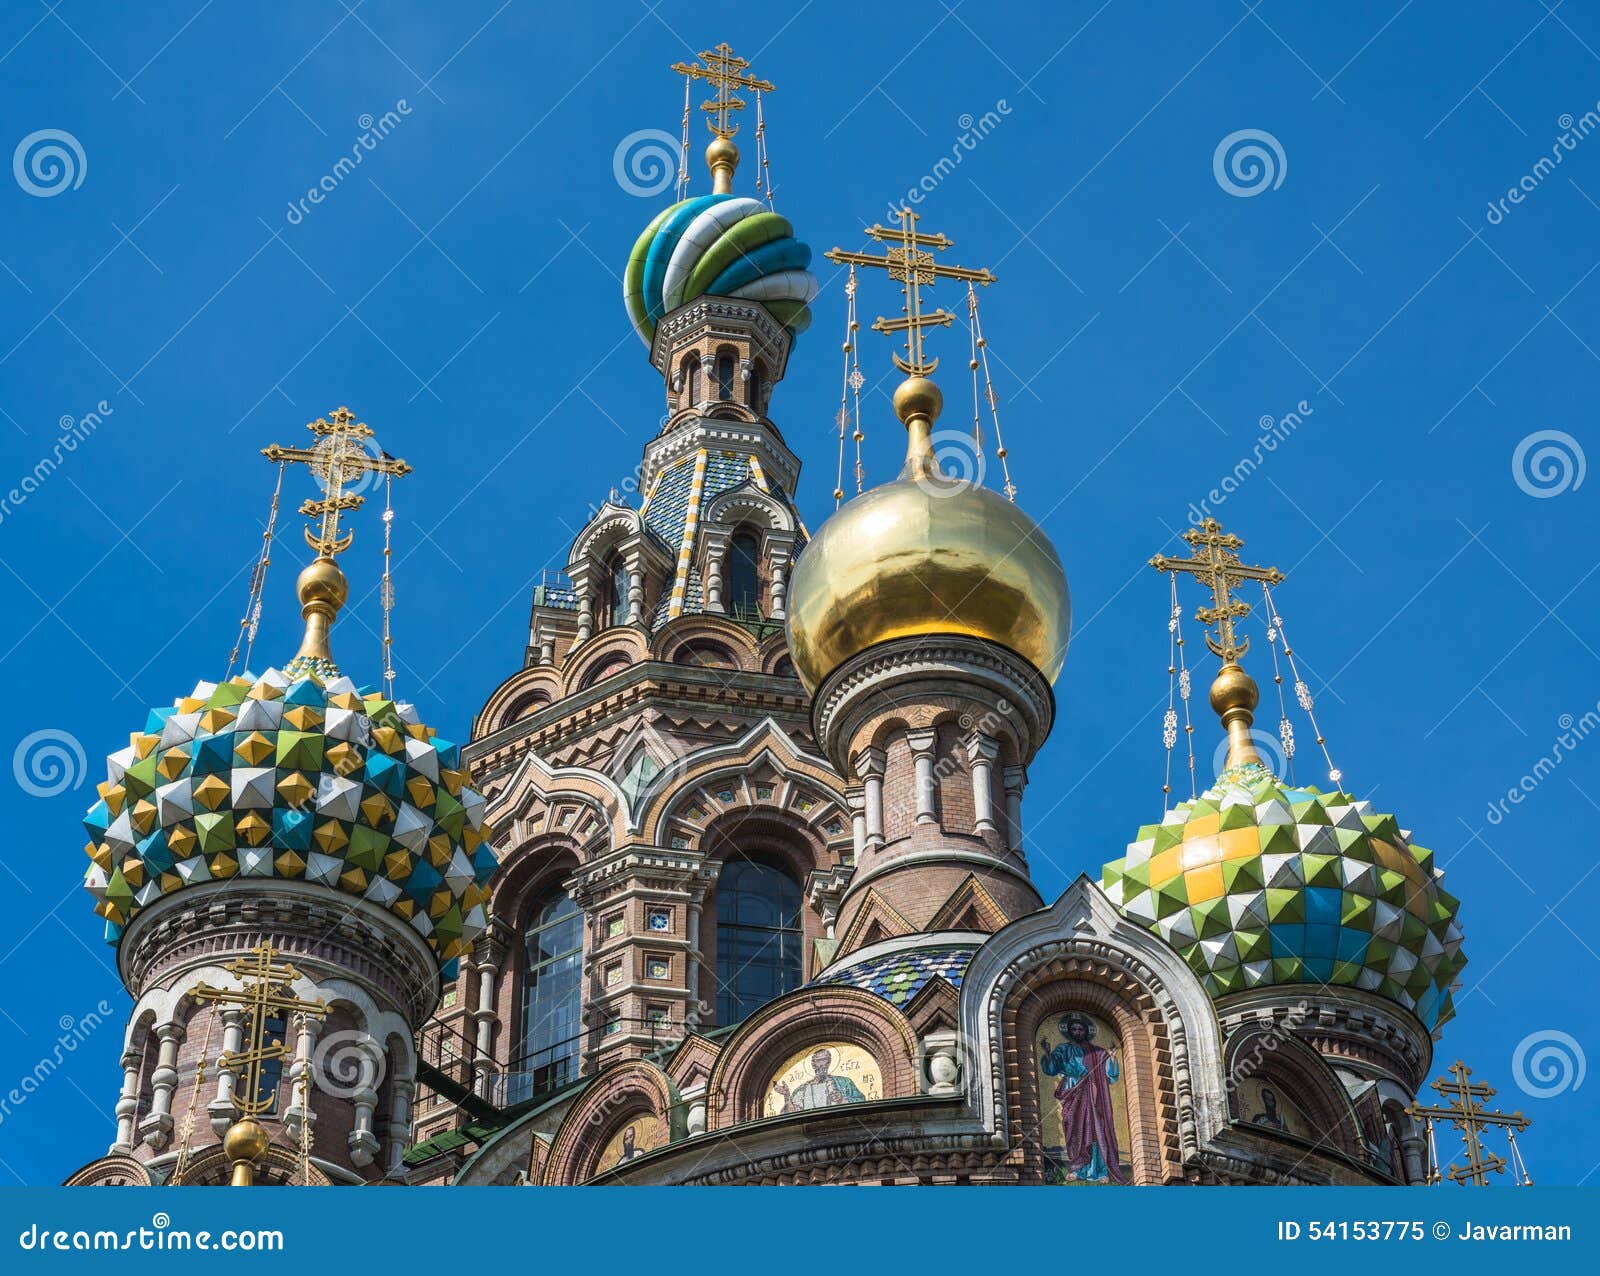 church of the savior on blood, saint petersburg, russia